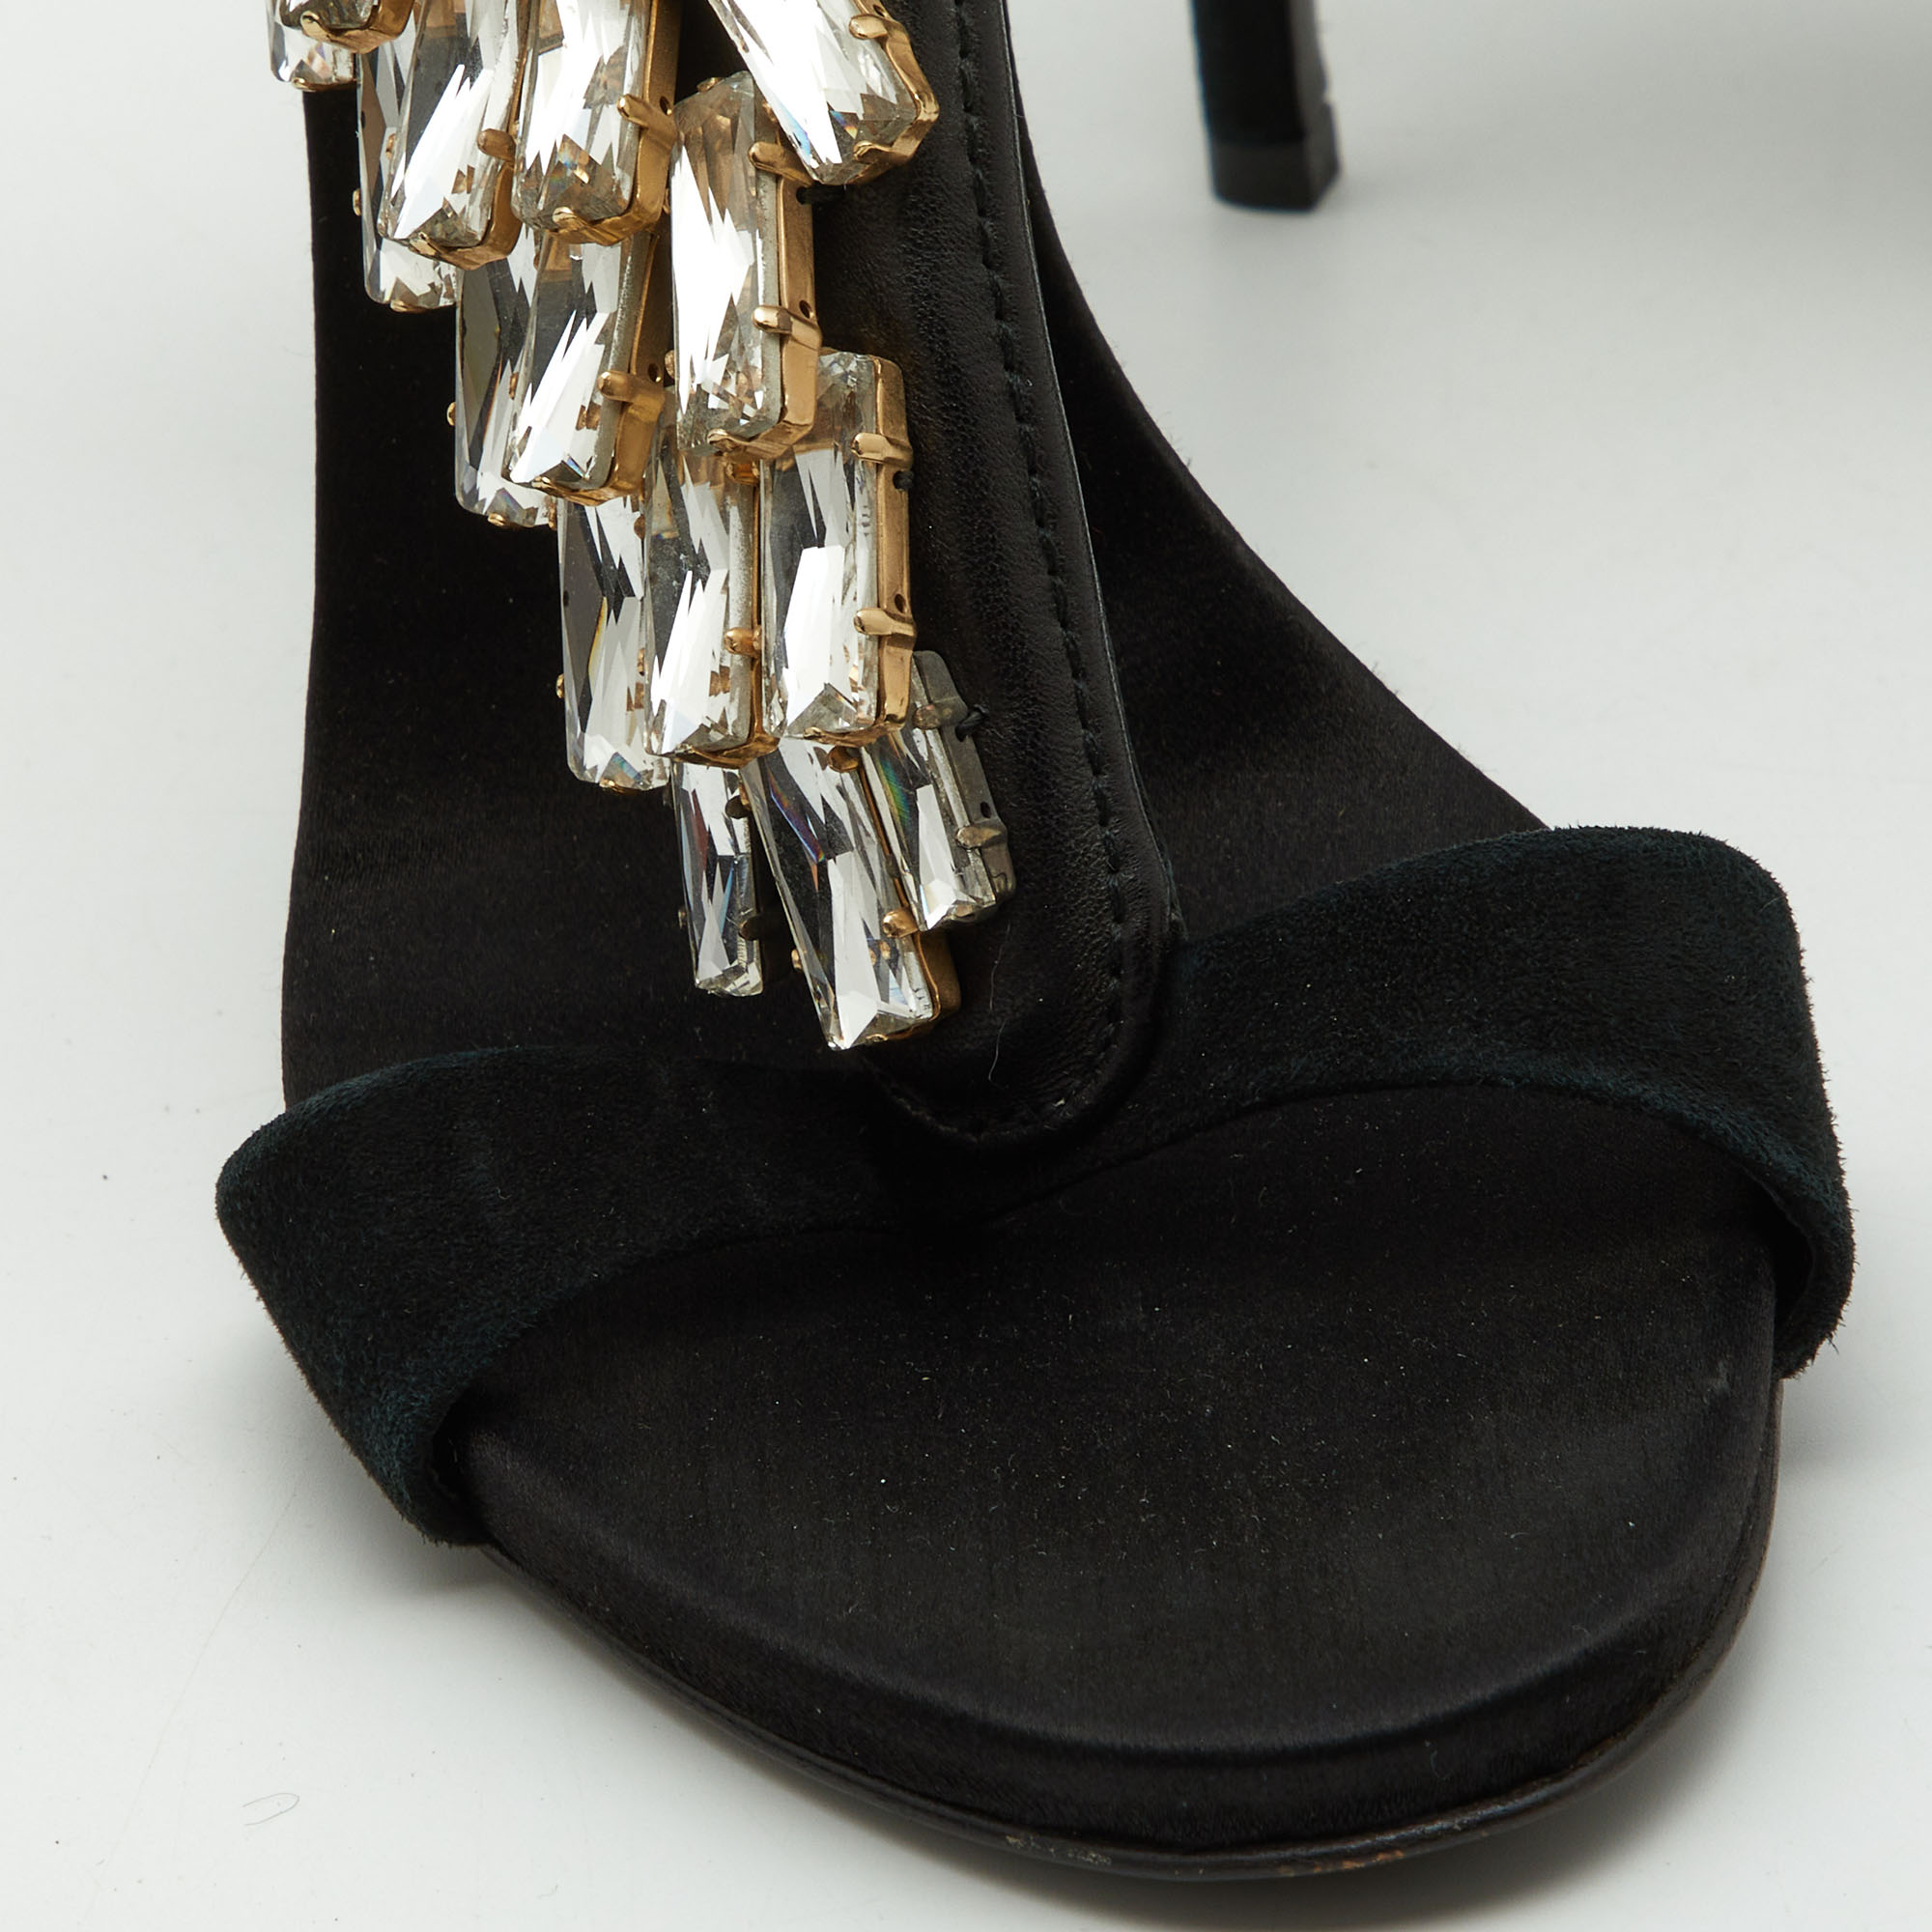 Giuseppe Zanotti Black Suede Crystal Embellished Ankle Strap Sandals Size 38